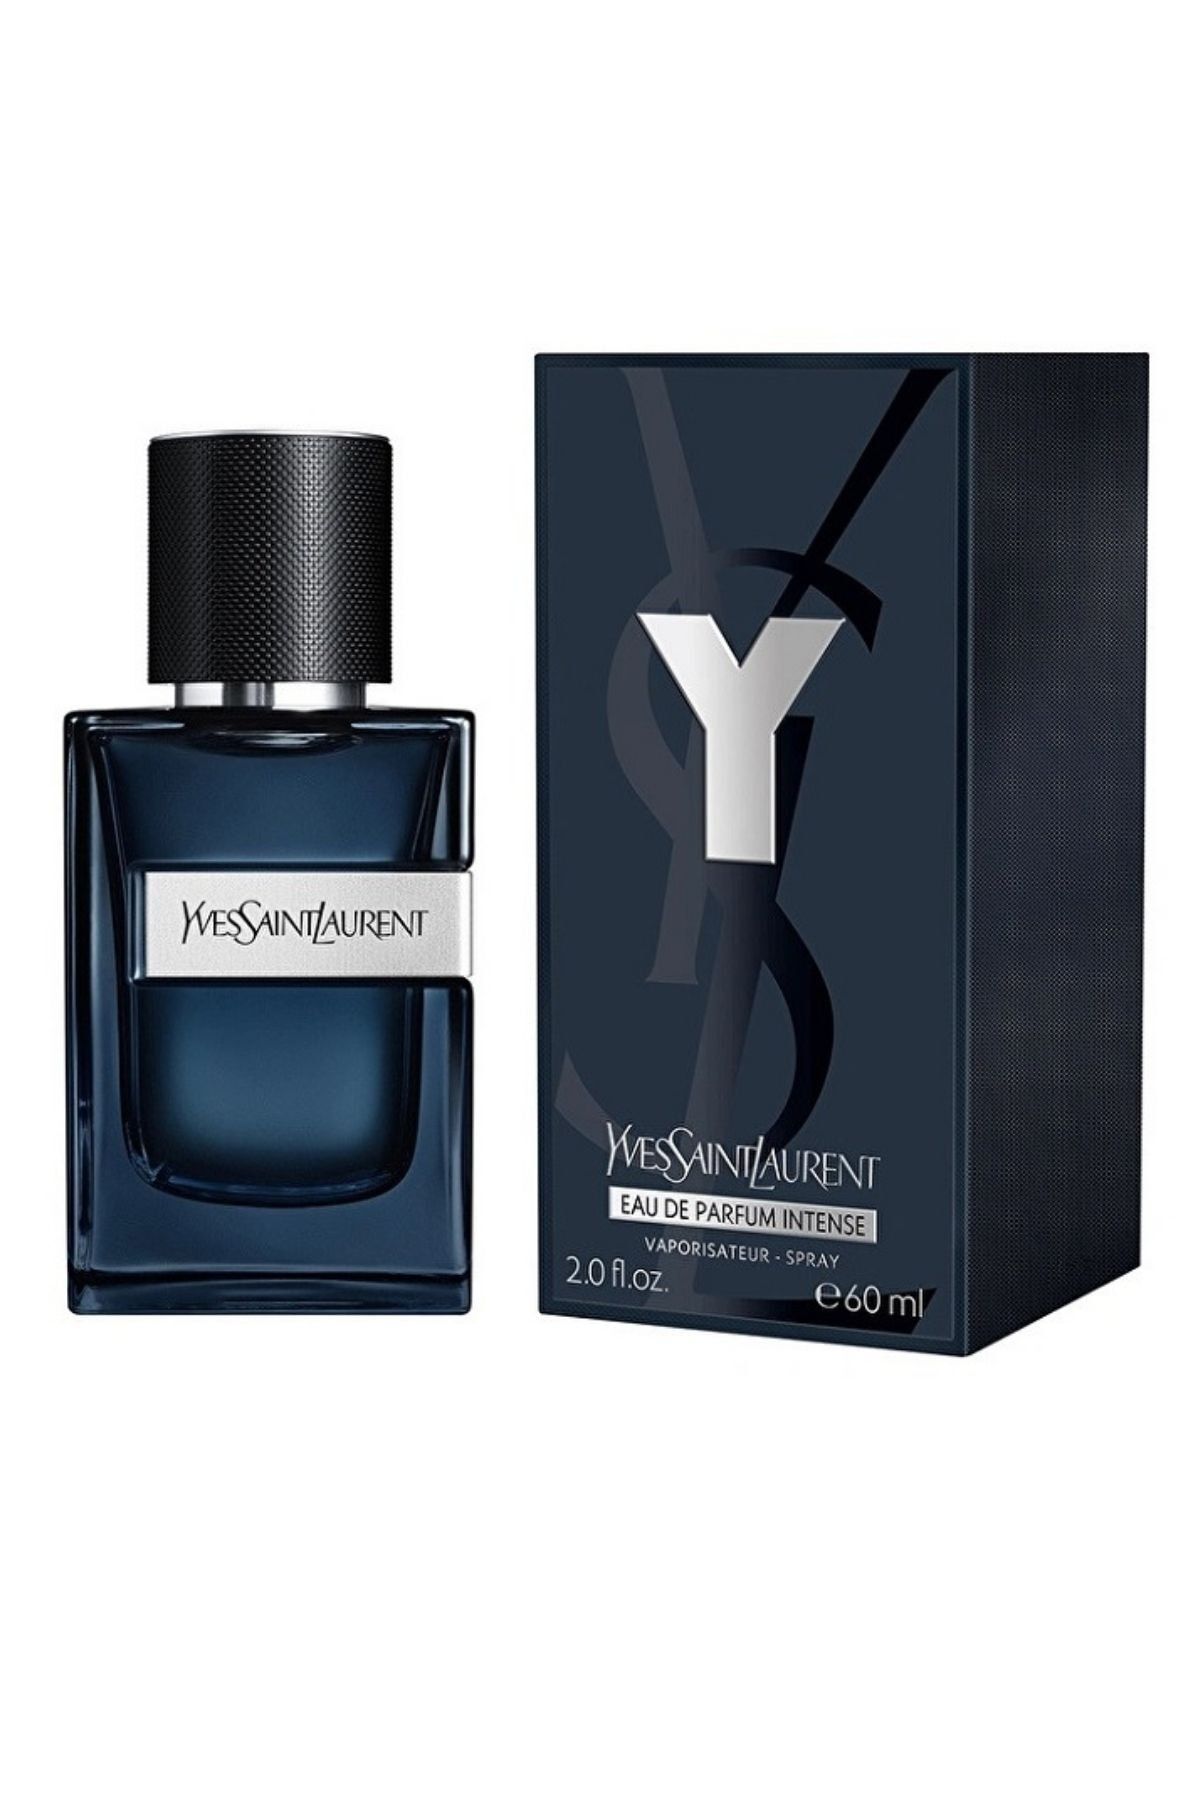 Мужская парфюмерная вода Yves Saint Laurent y le Parfum 100 мл. Yves Saint Laurent мужской Парфюм. Intense men духи мужские. Perfume men. Ив сен лоран интенс